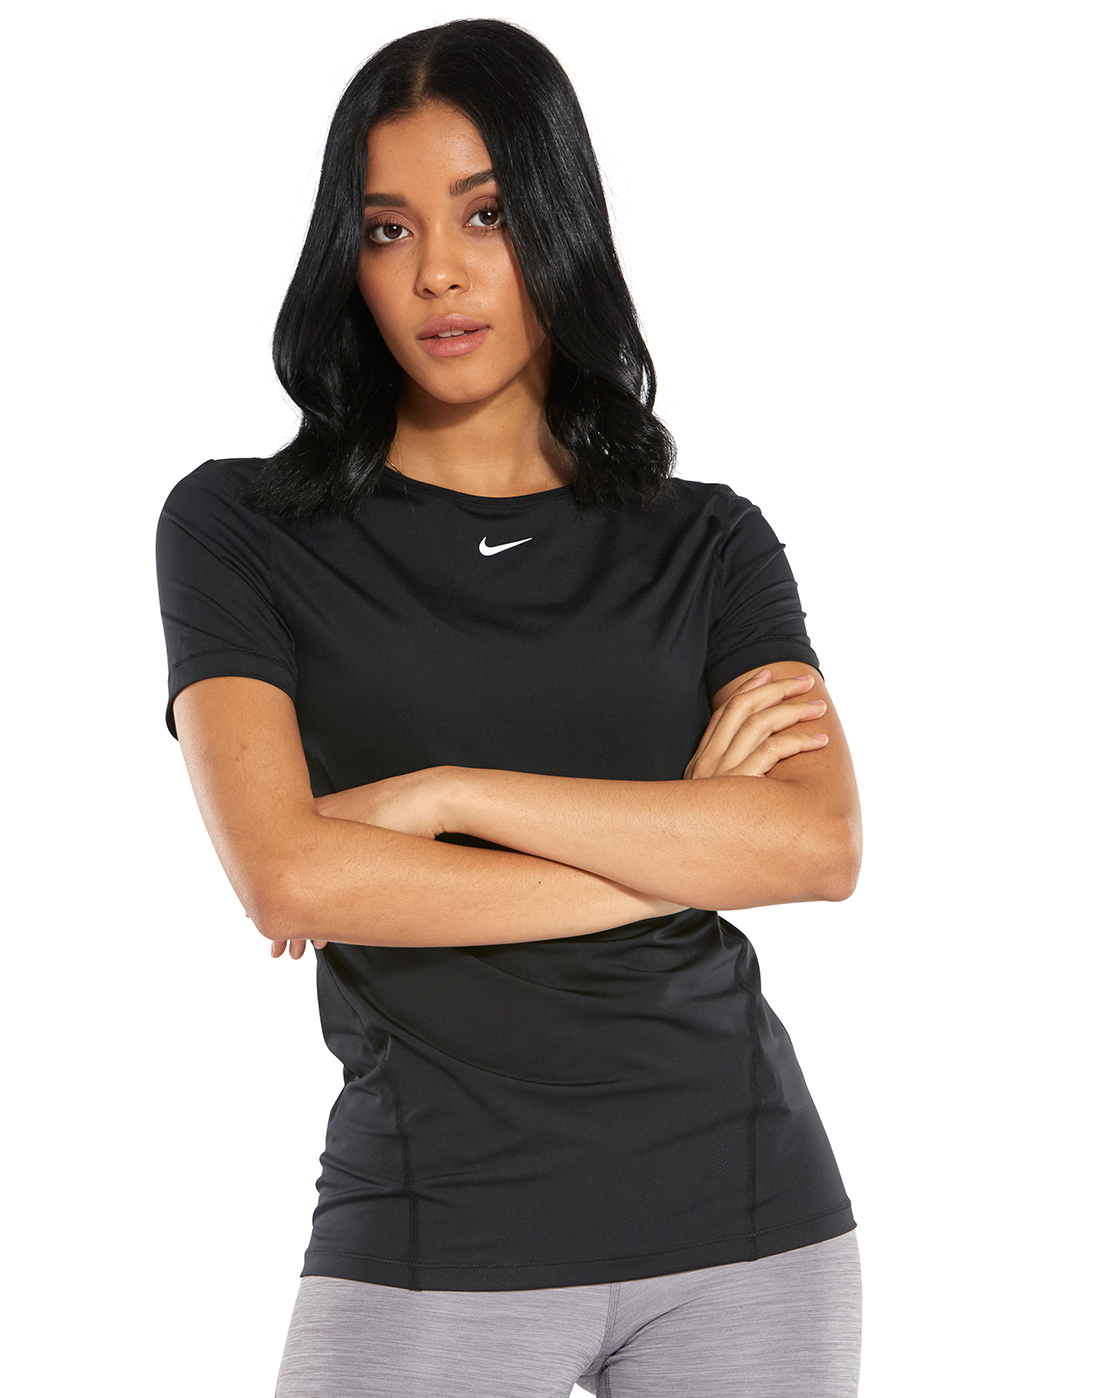 Women's Black Nike Pro Gym T-Shirt | Life Style Sports